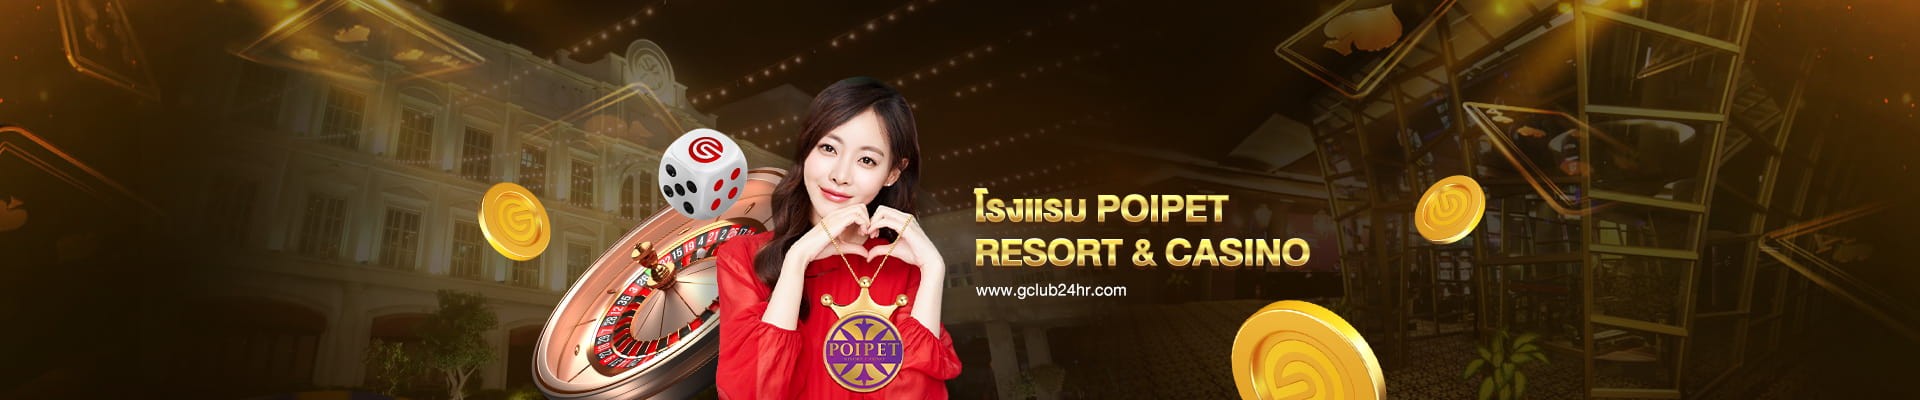 gclub24hr_casino_online_poipet_casino_resort